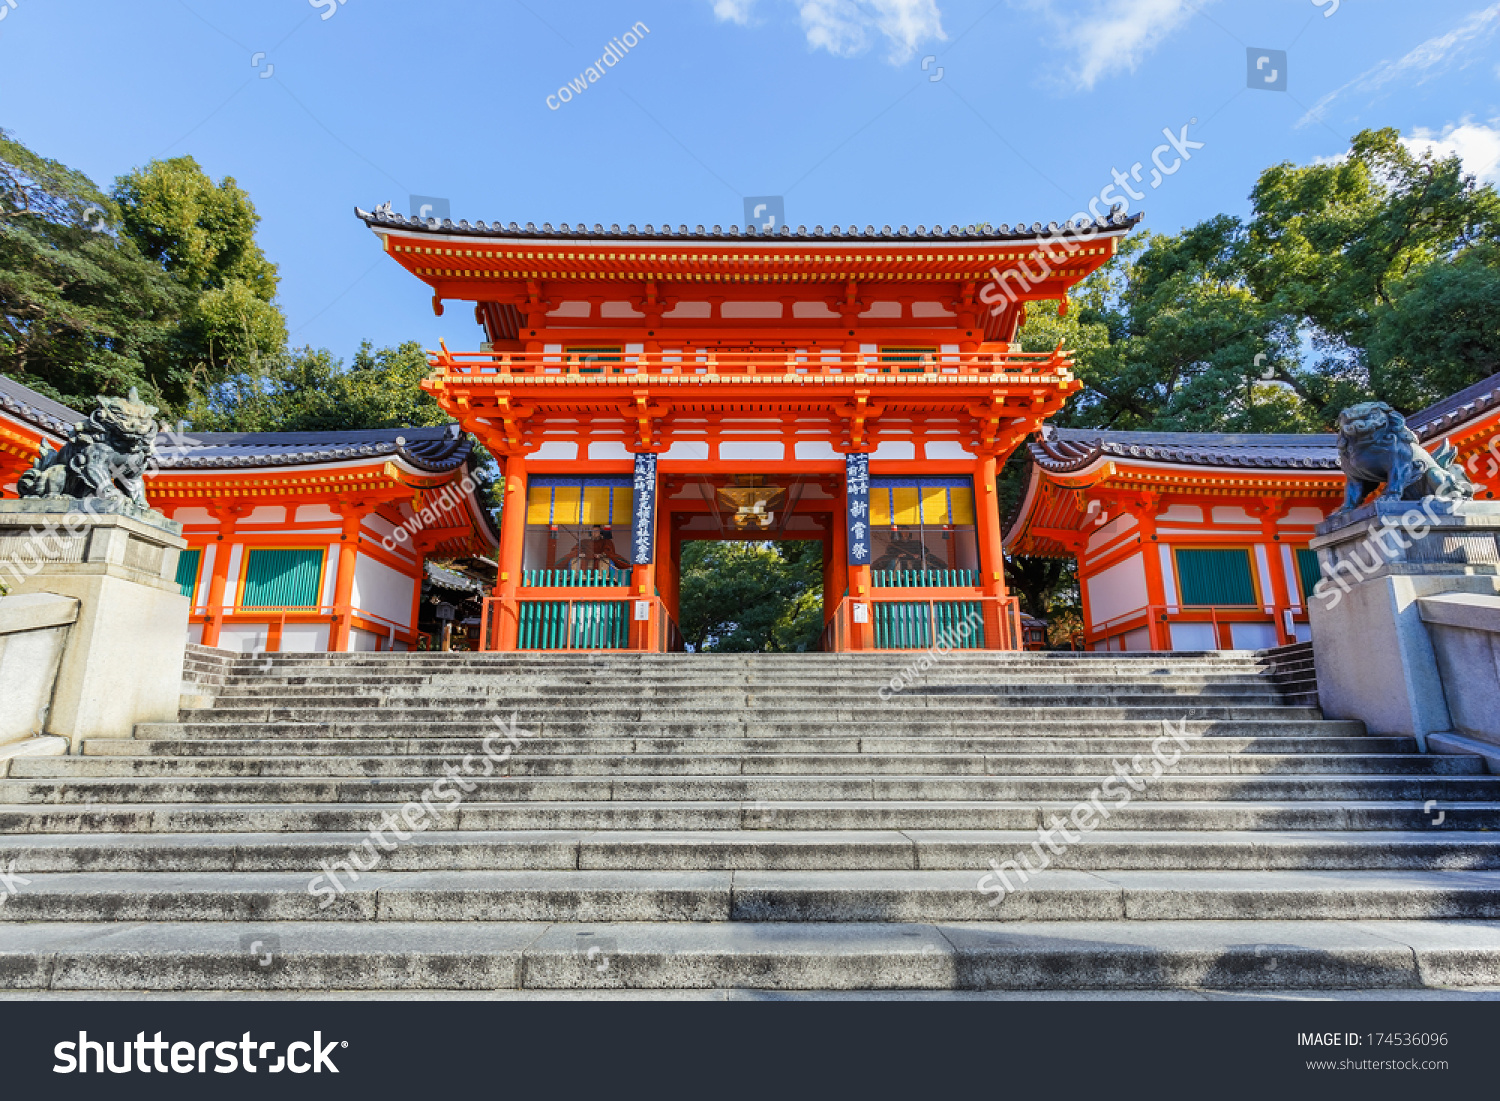 The gate of Yasaka Jinja shrine in Kyoto, Japan #174536096